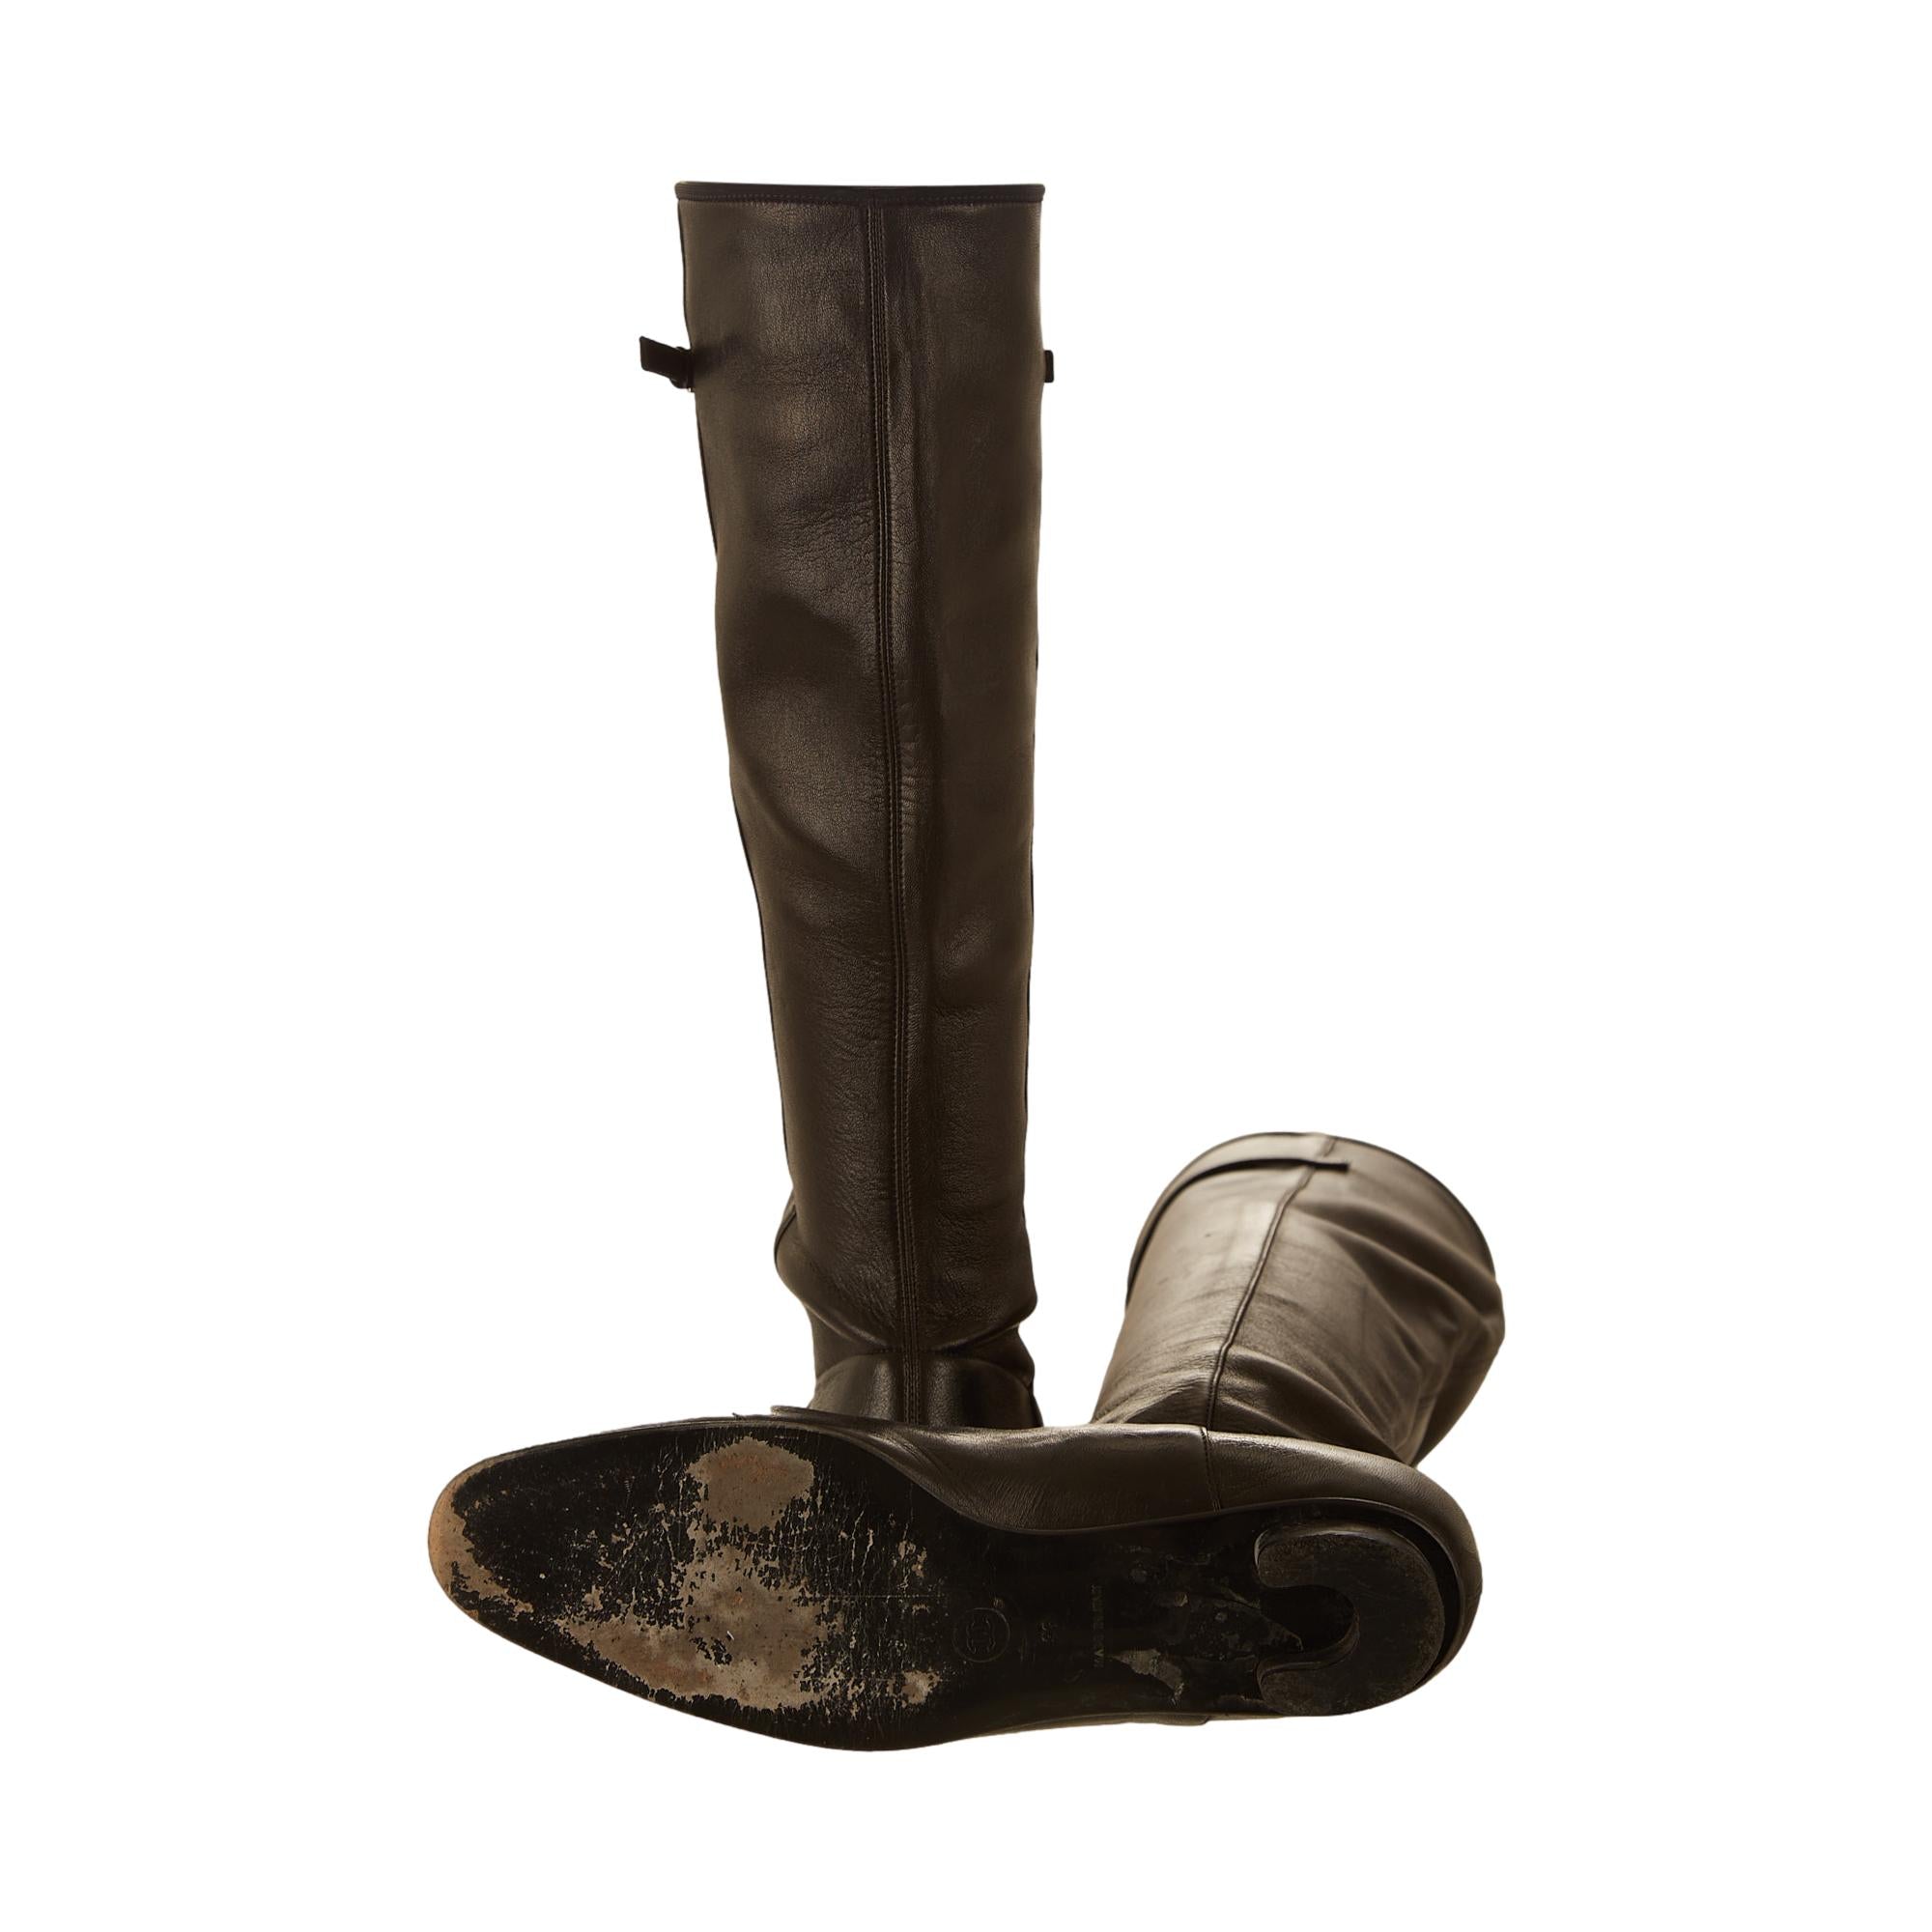 Treasures of NYC - Chanel Black Logo Tall Boots